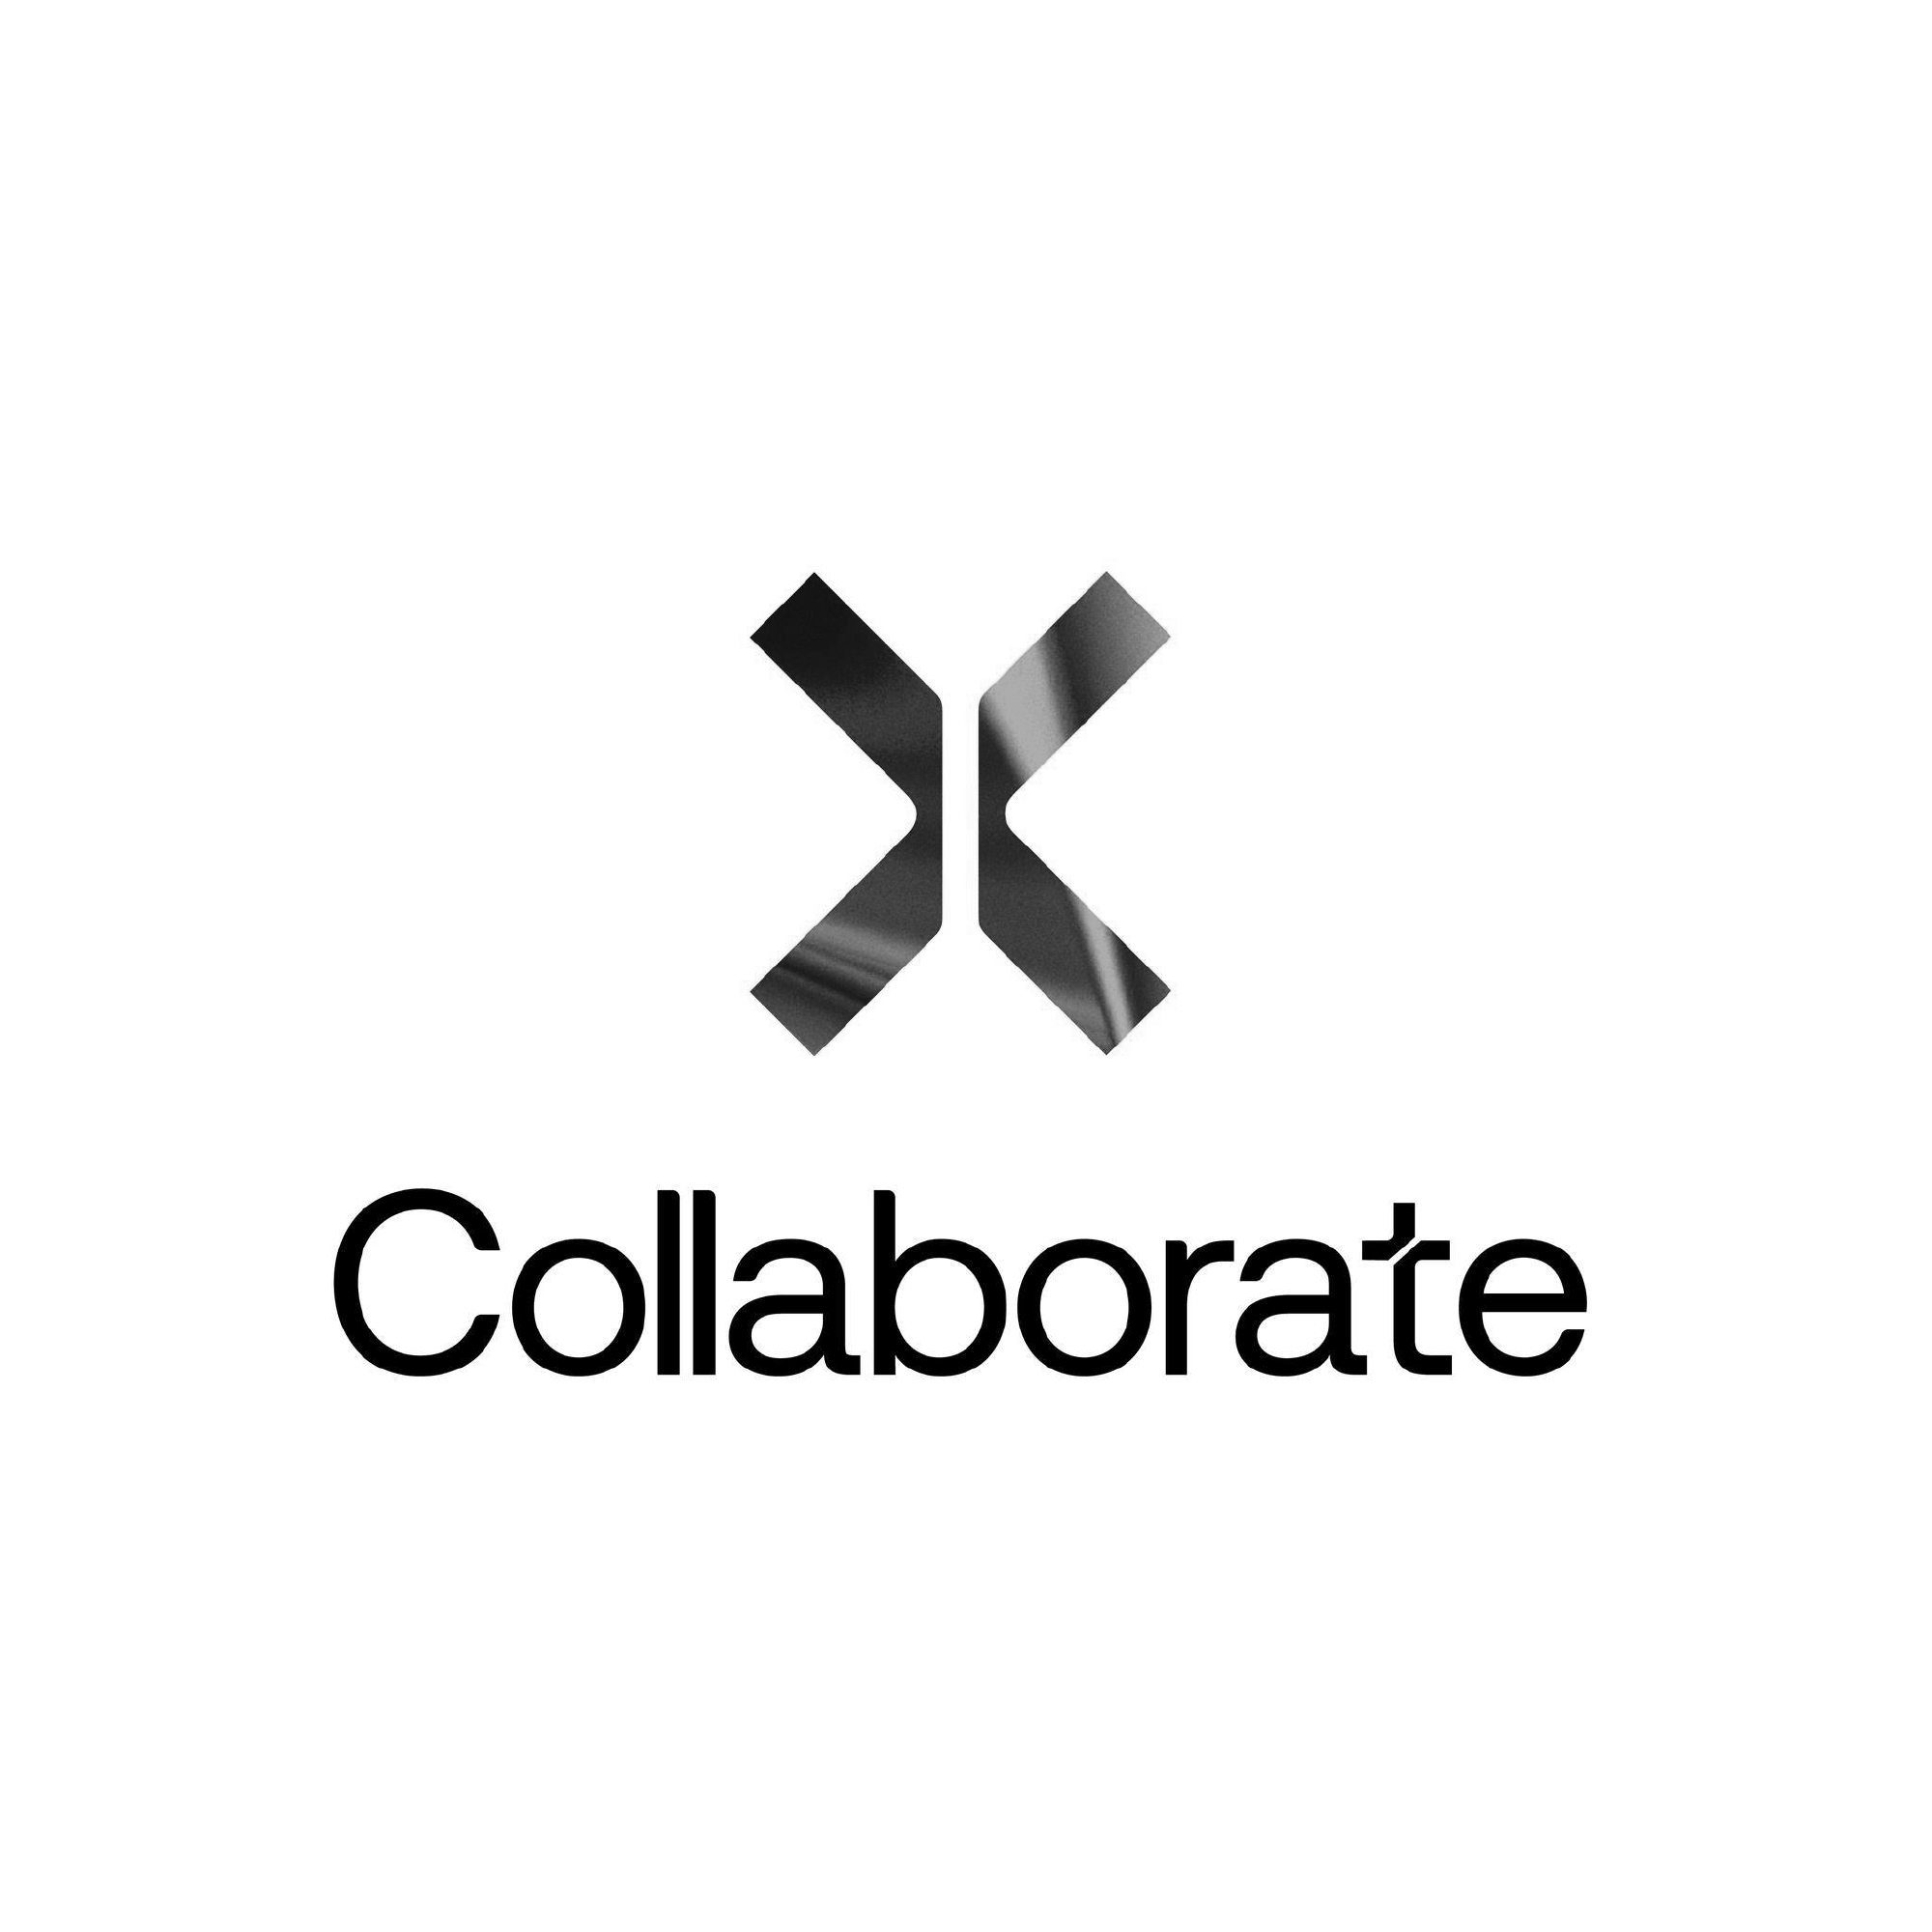 Collaborate (Copy) (Copy) (Copy)